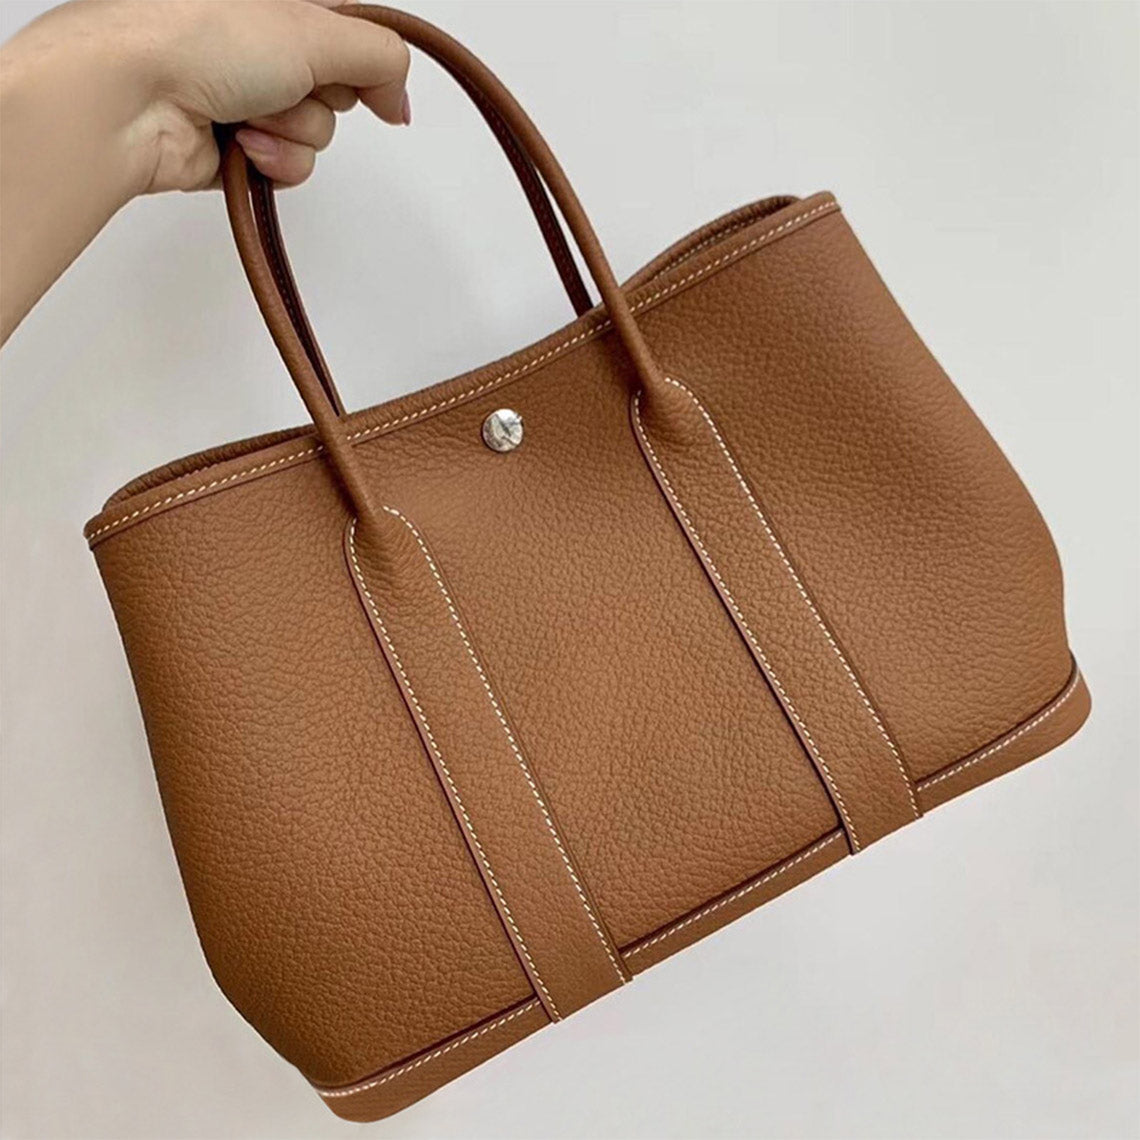 Top Grain Leather Inspired Garden Party Handbag